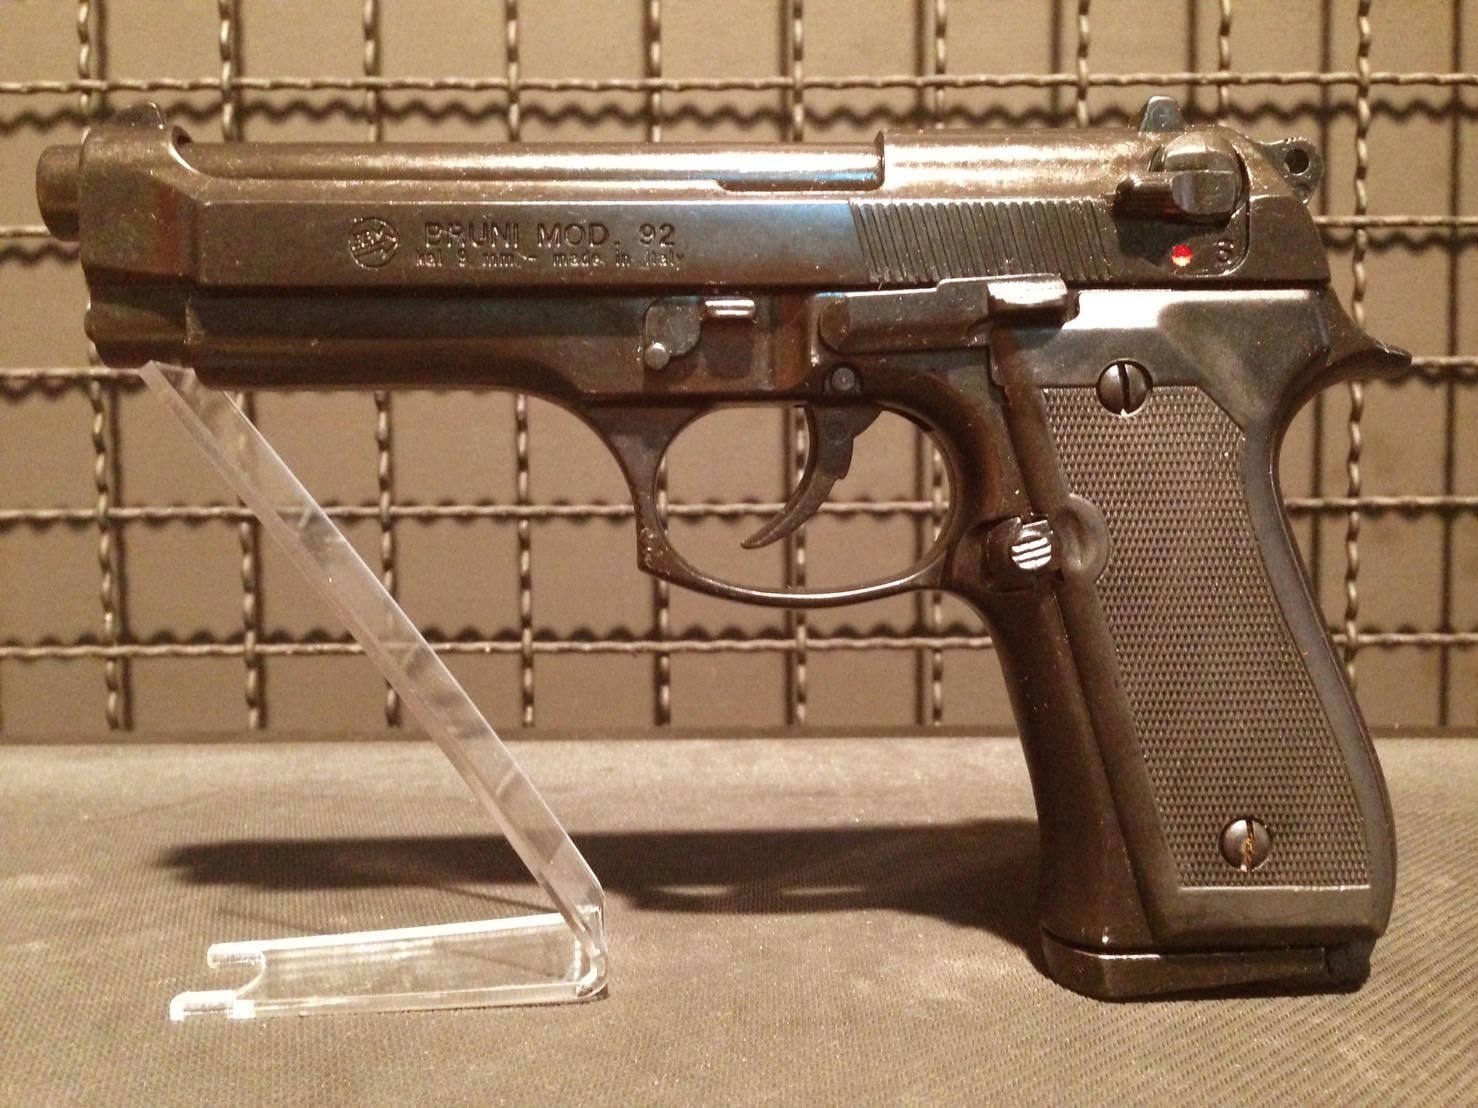 Blank M92 fs ปืนสุดคลาสสิคยุค 90 หรือที่เรียกขานกันว่า ปืนพระเอก ต้นตำรับจากอิตาลี สีรมดำด้าน สวย ดุ ดิบ คลาสสิค Made in Italy